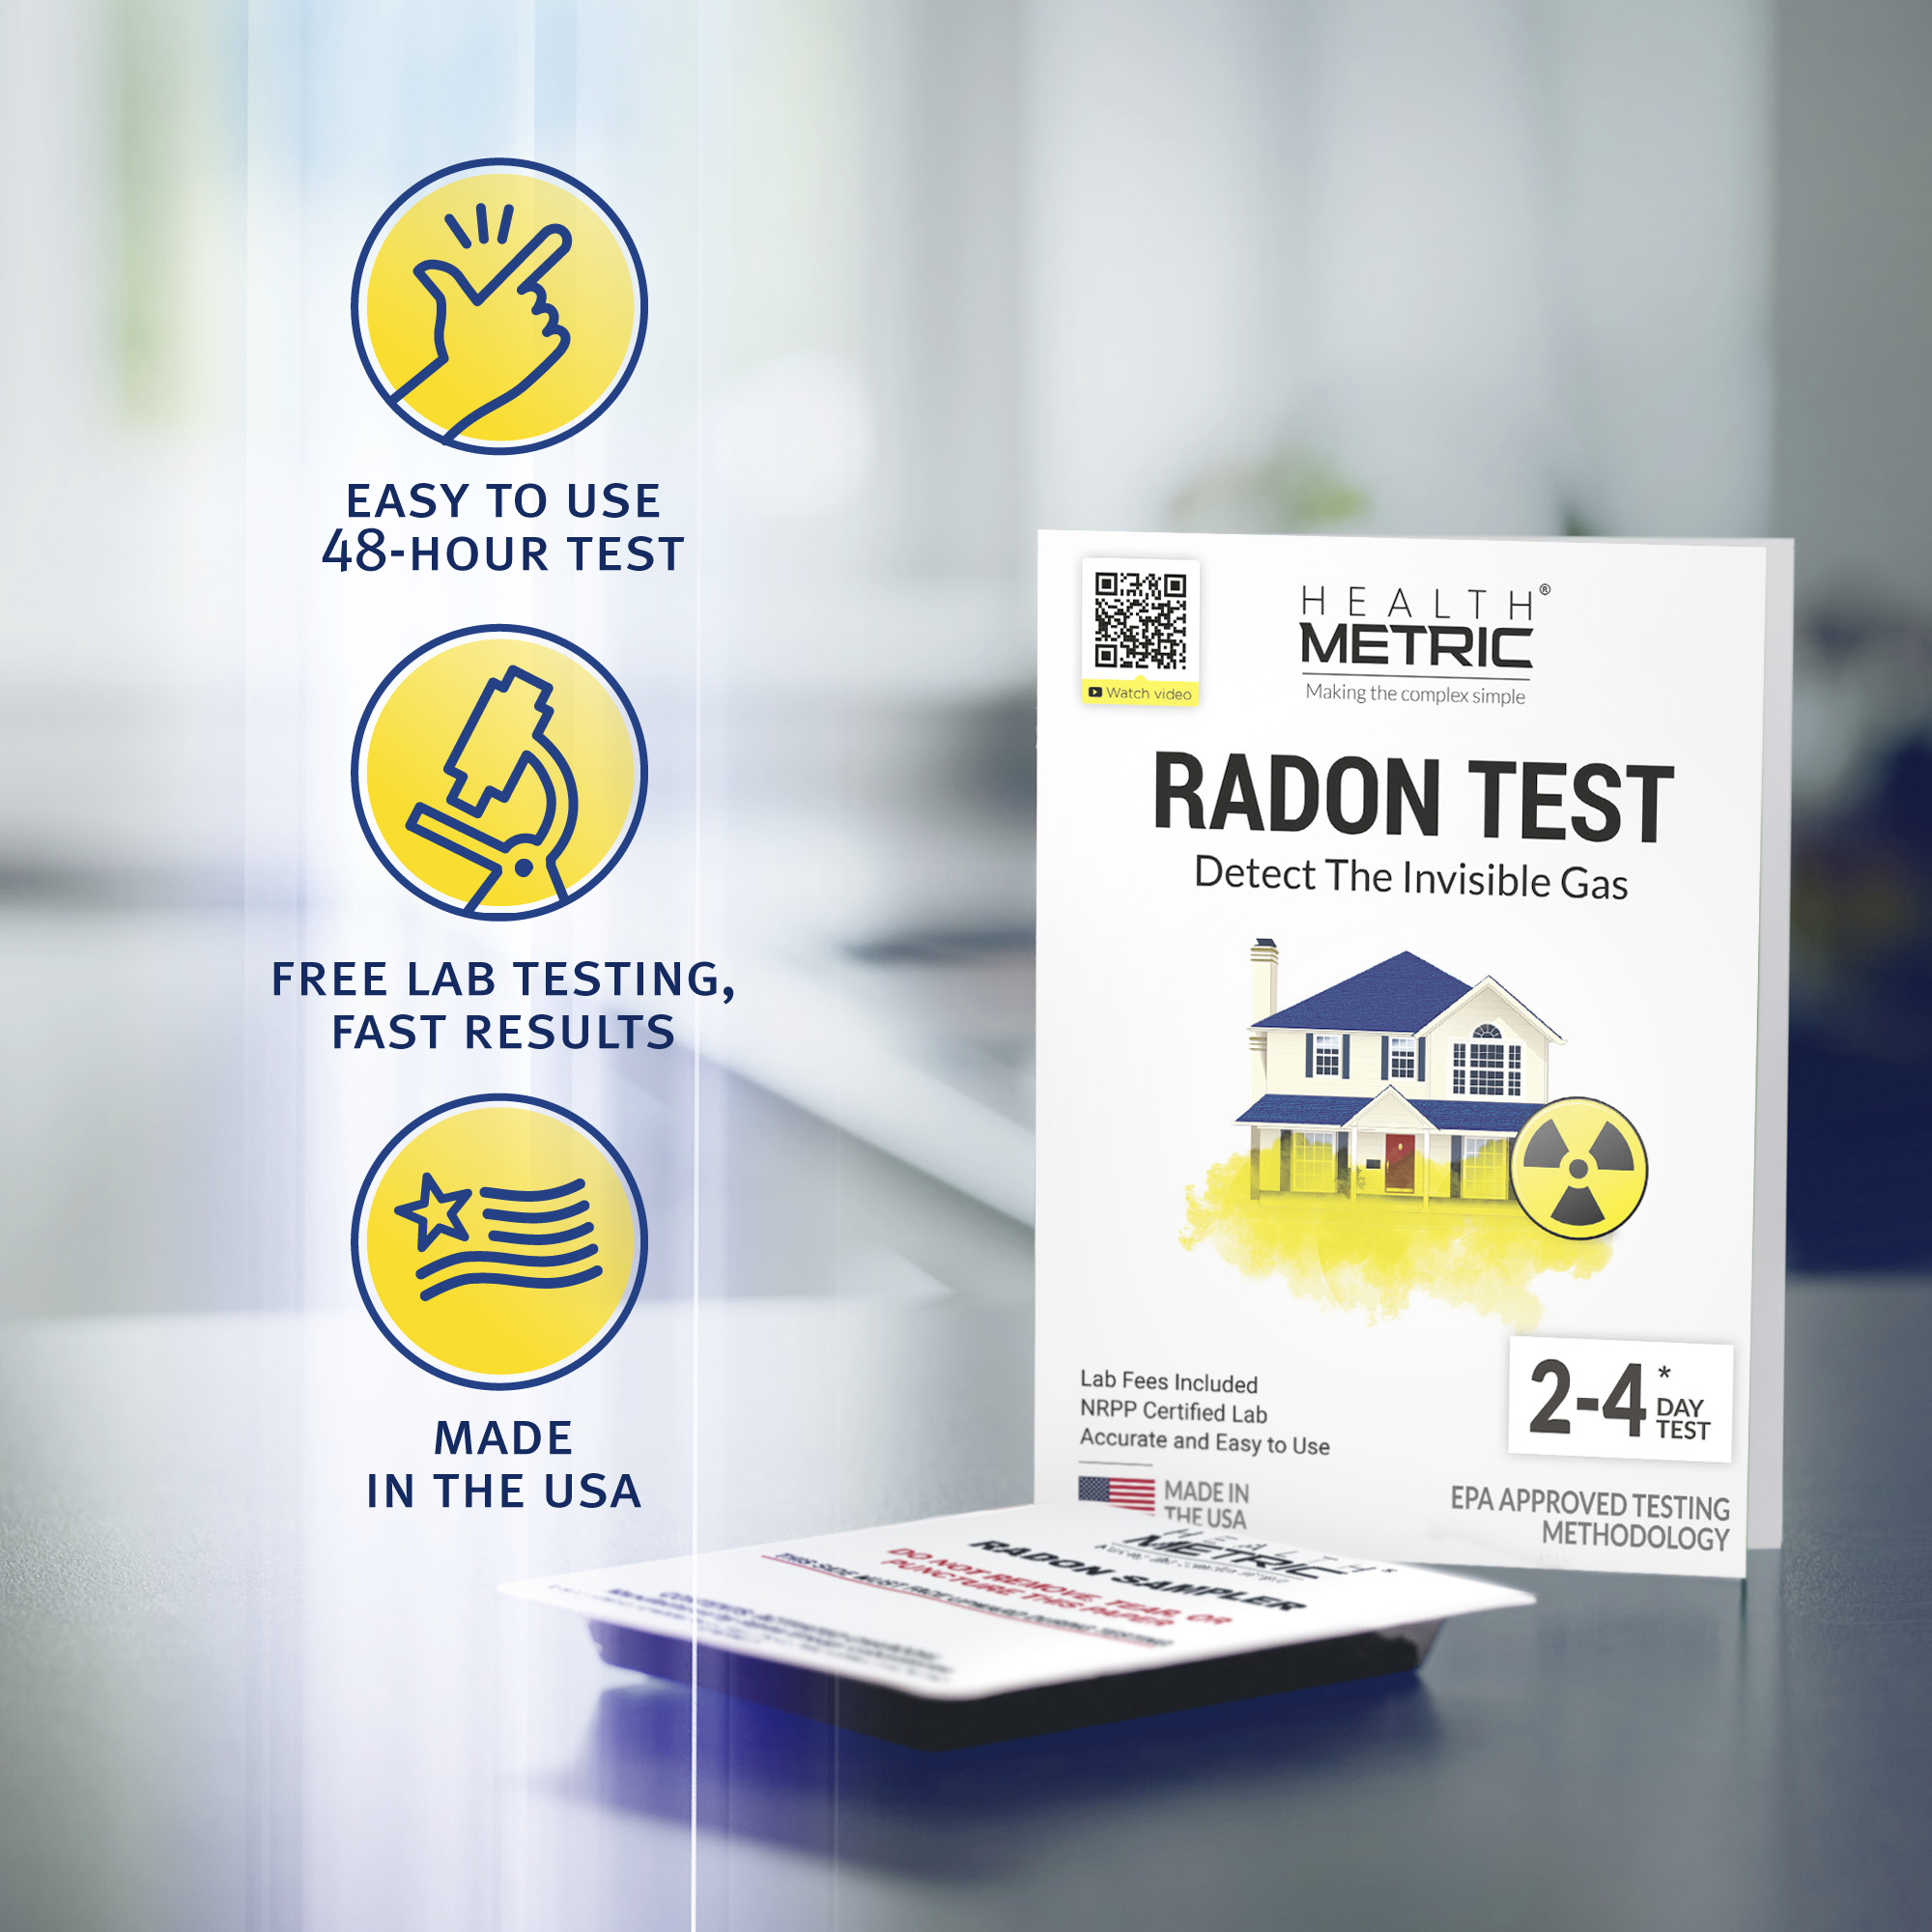 Radon Test Kit for Home Health Metric